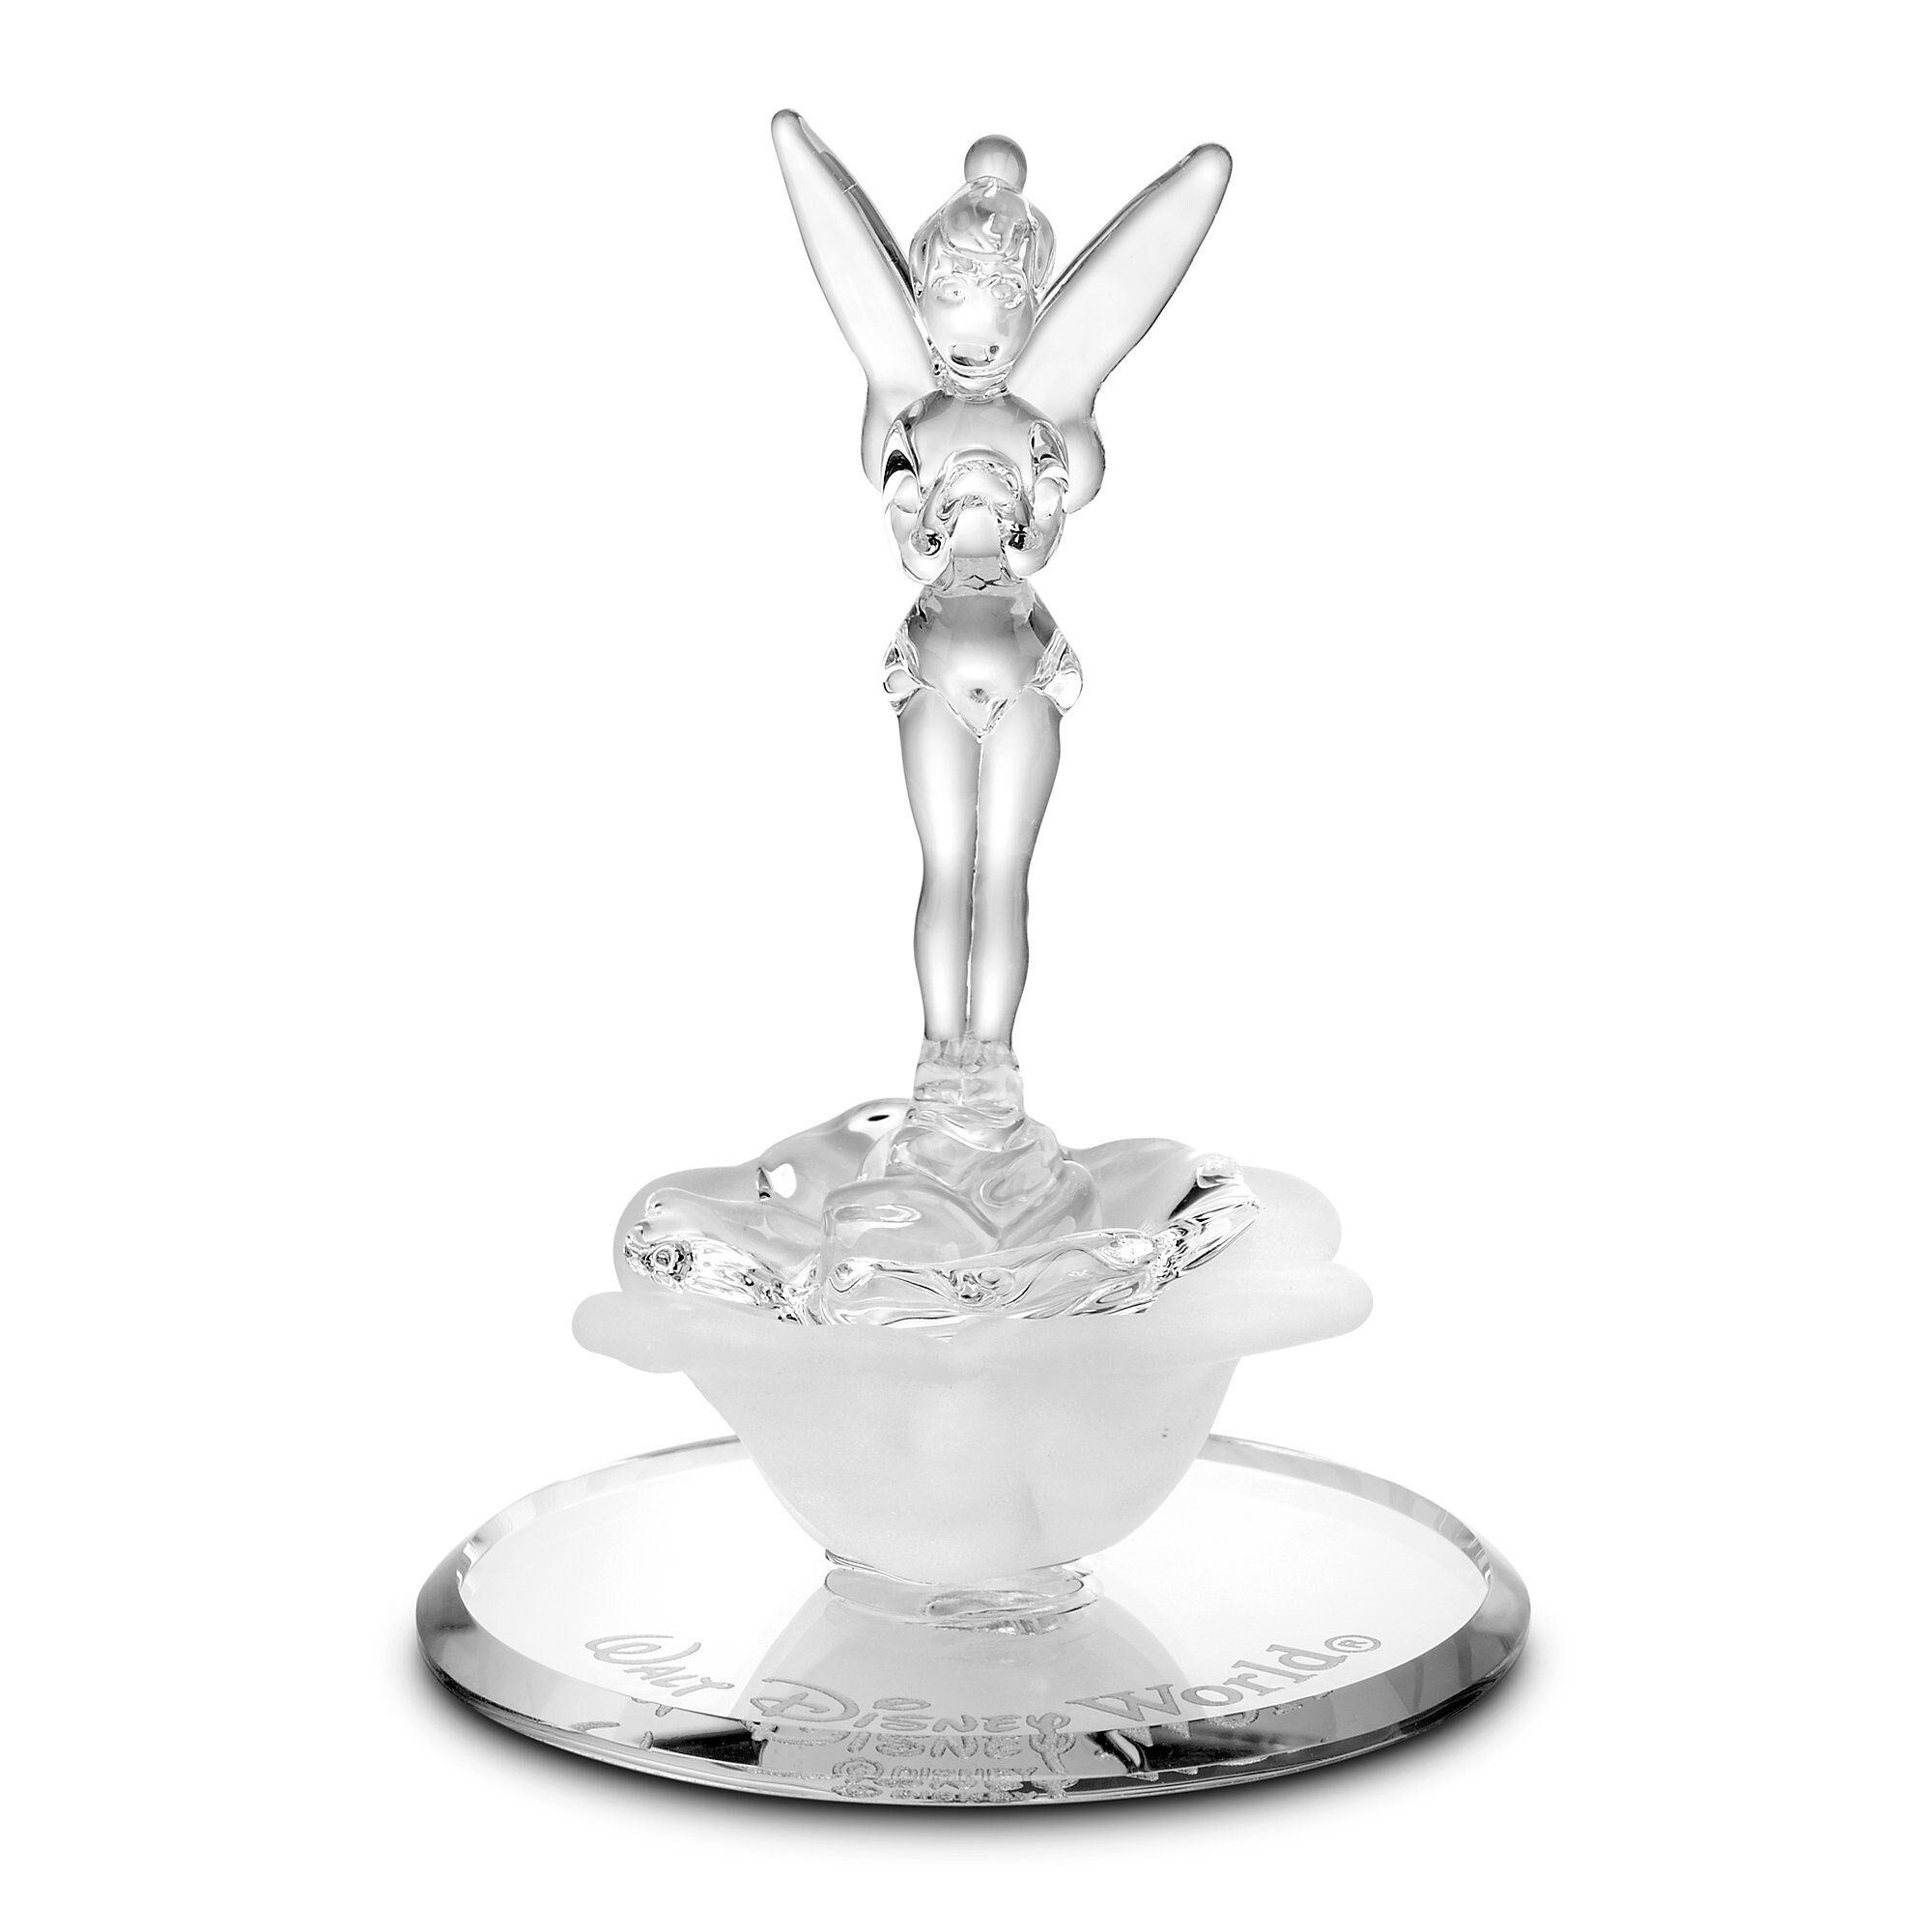 Tinker Bell Glass Figurine by Arribas - Walt Disney World